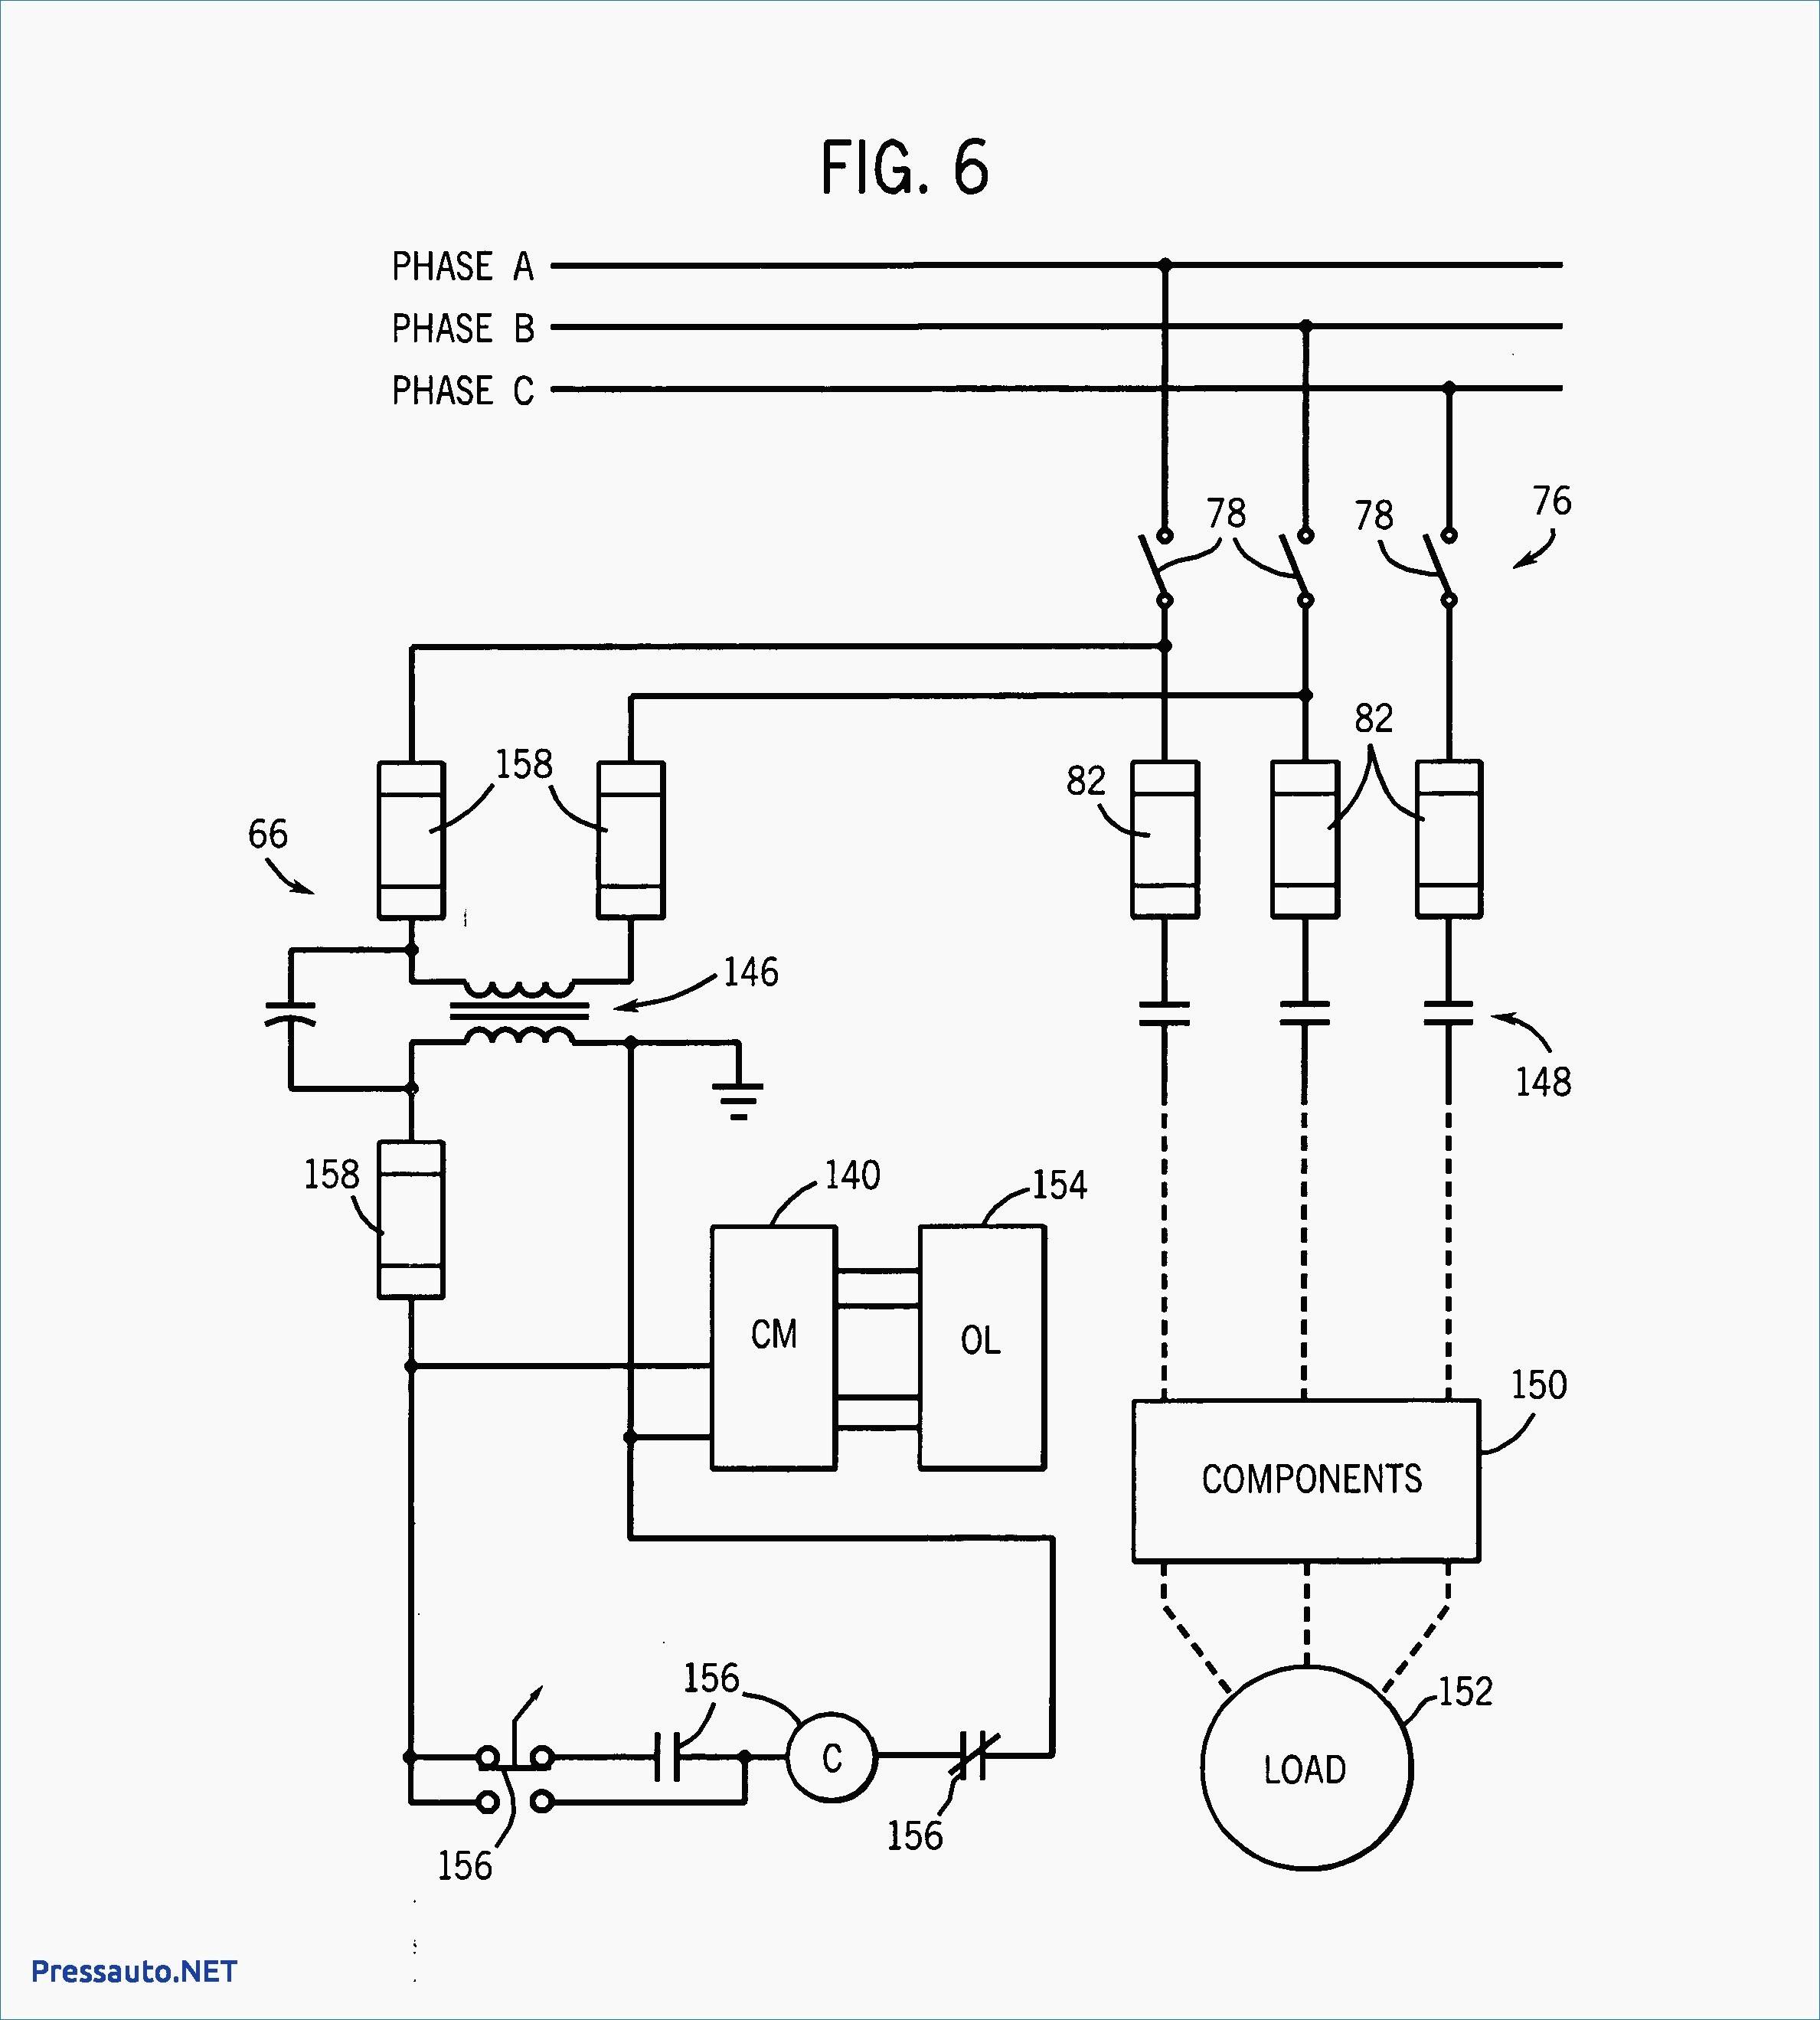 Diagram In Pictures Database Emerson Electric Motor Wiring Diagram 9k322j Just Download Or Read Diagram 9k322j Sylvie Baussier Turbosmart Boost Wiring Onyxum Com